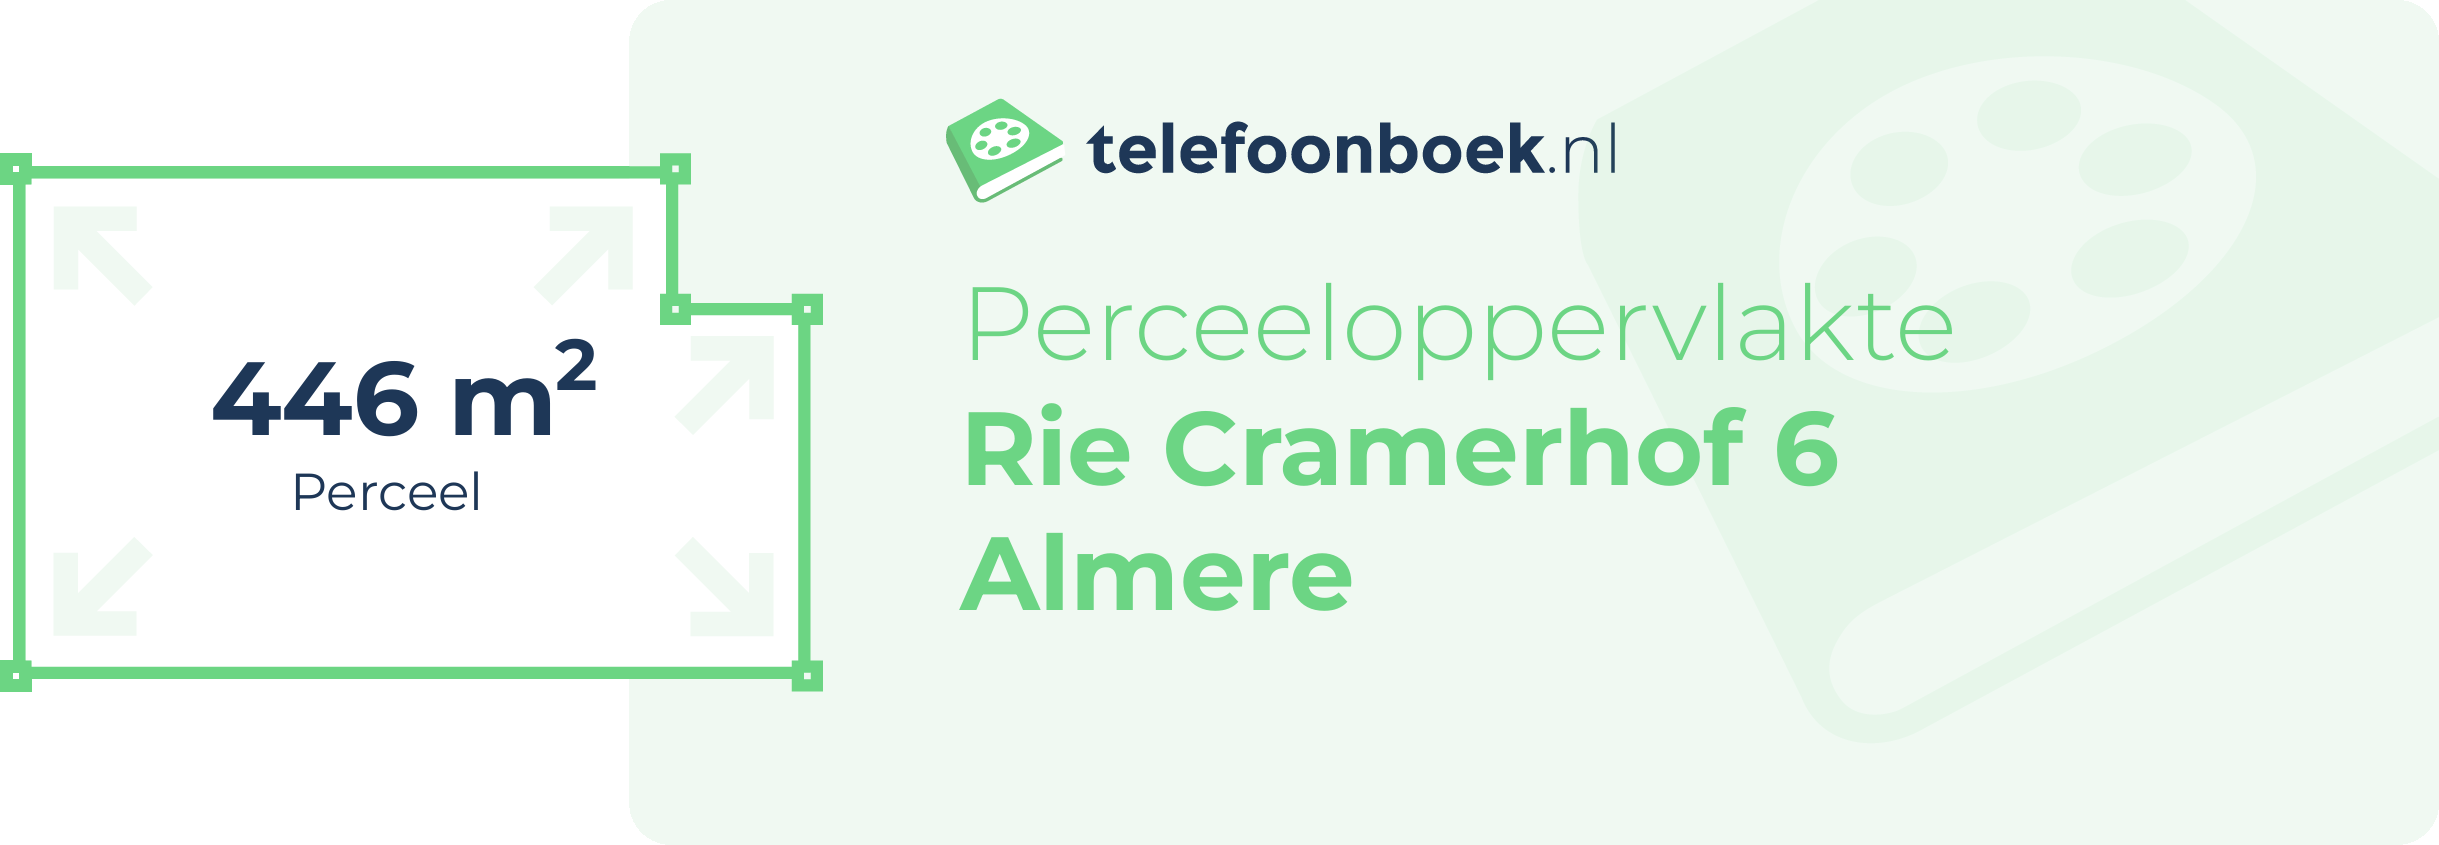 Perceeloppervlakte Rie Cramerhof 6 Almere